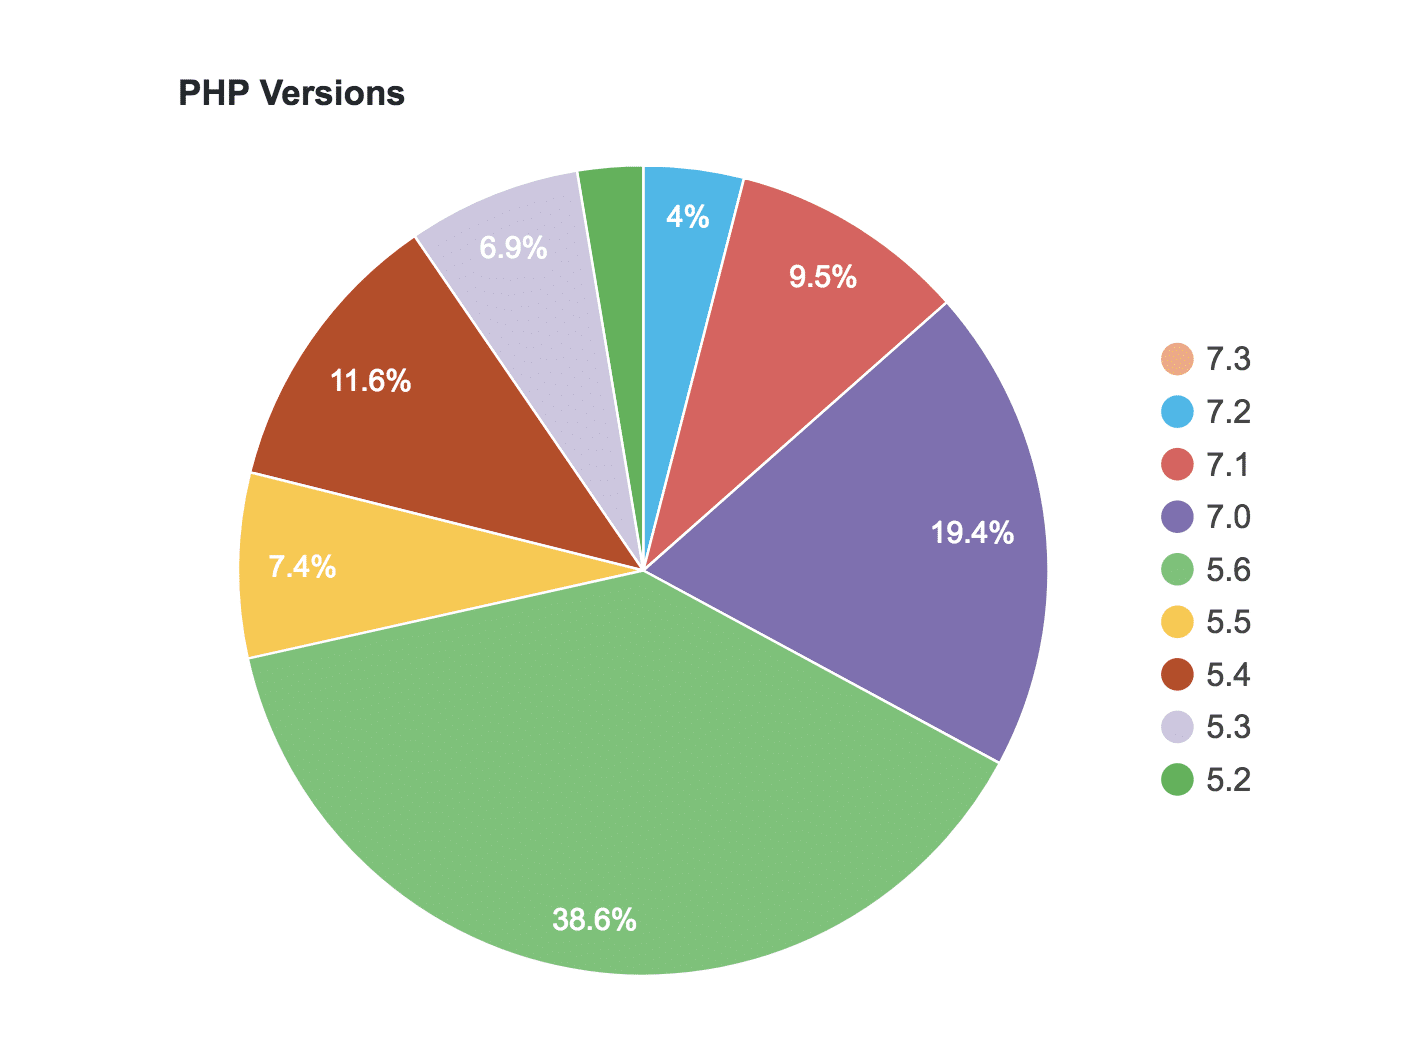 WordPress PHP versions